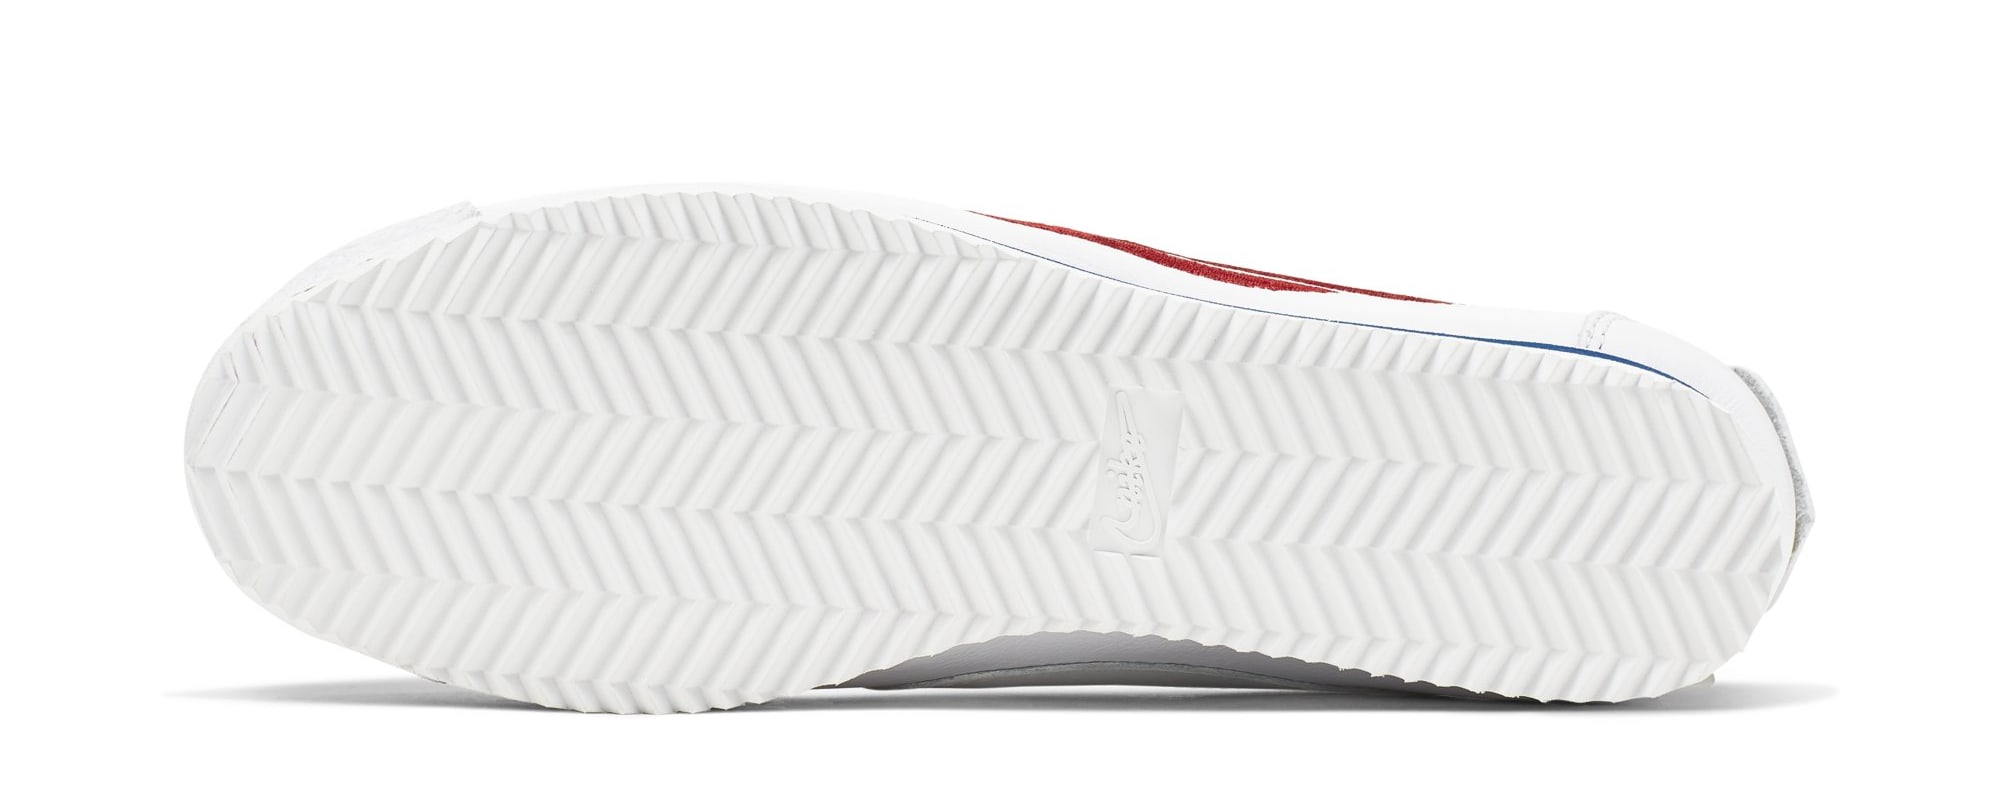 Nike Classic Cortez &#x27;Shoe Dog Pack (Falcon)&#x27; CJ2586-101 (Sole)